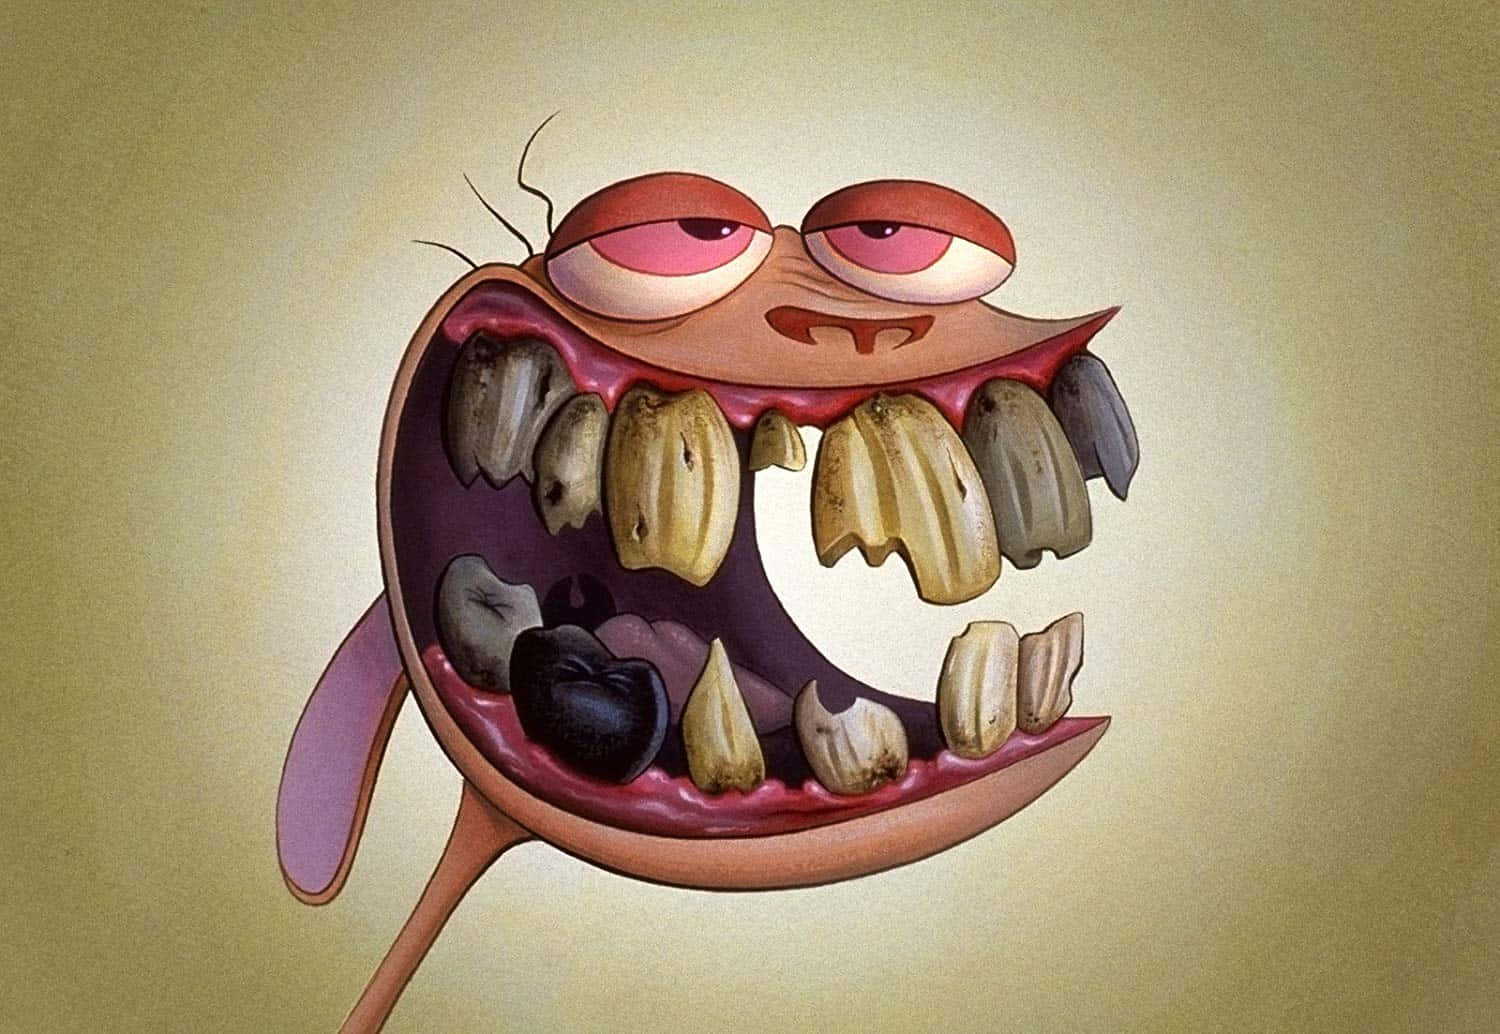 Decayed Teeth Cartoon Character Wallpaper